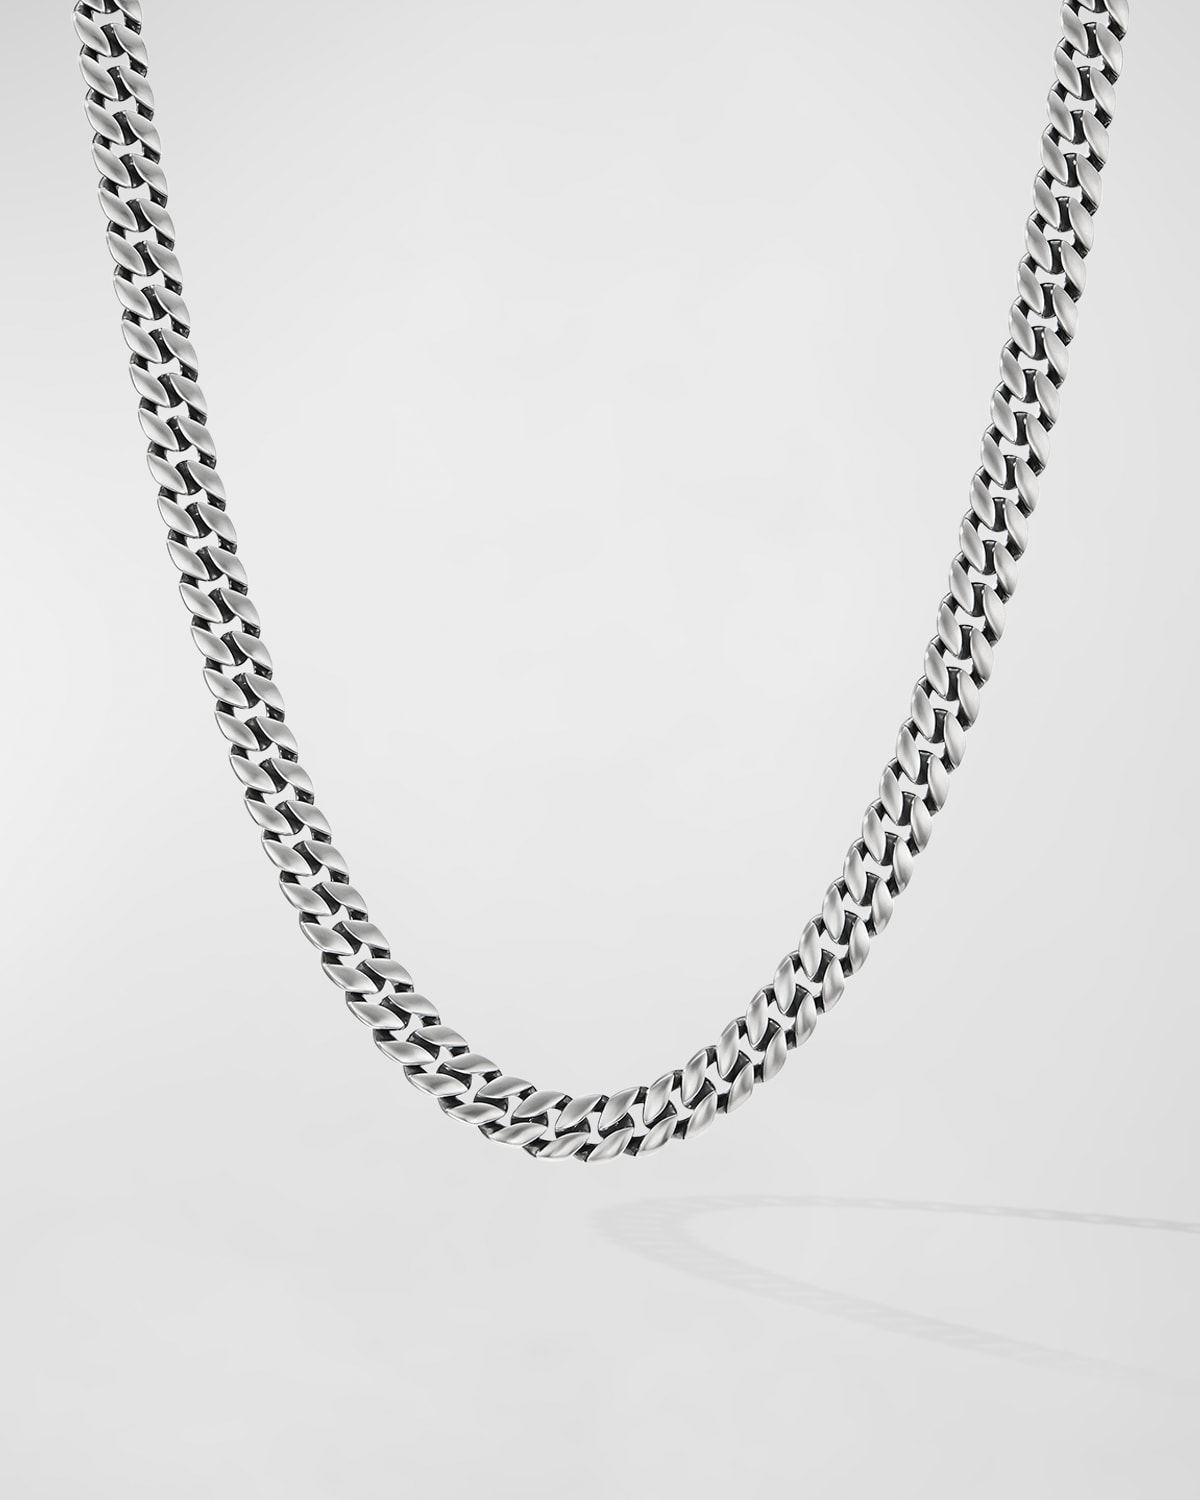 David Yurman Men's Curb Chain Necklace In Sterling Silver, 8mm, 20"l